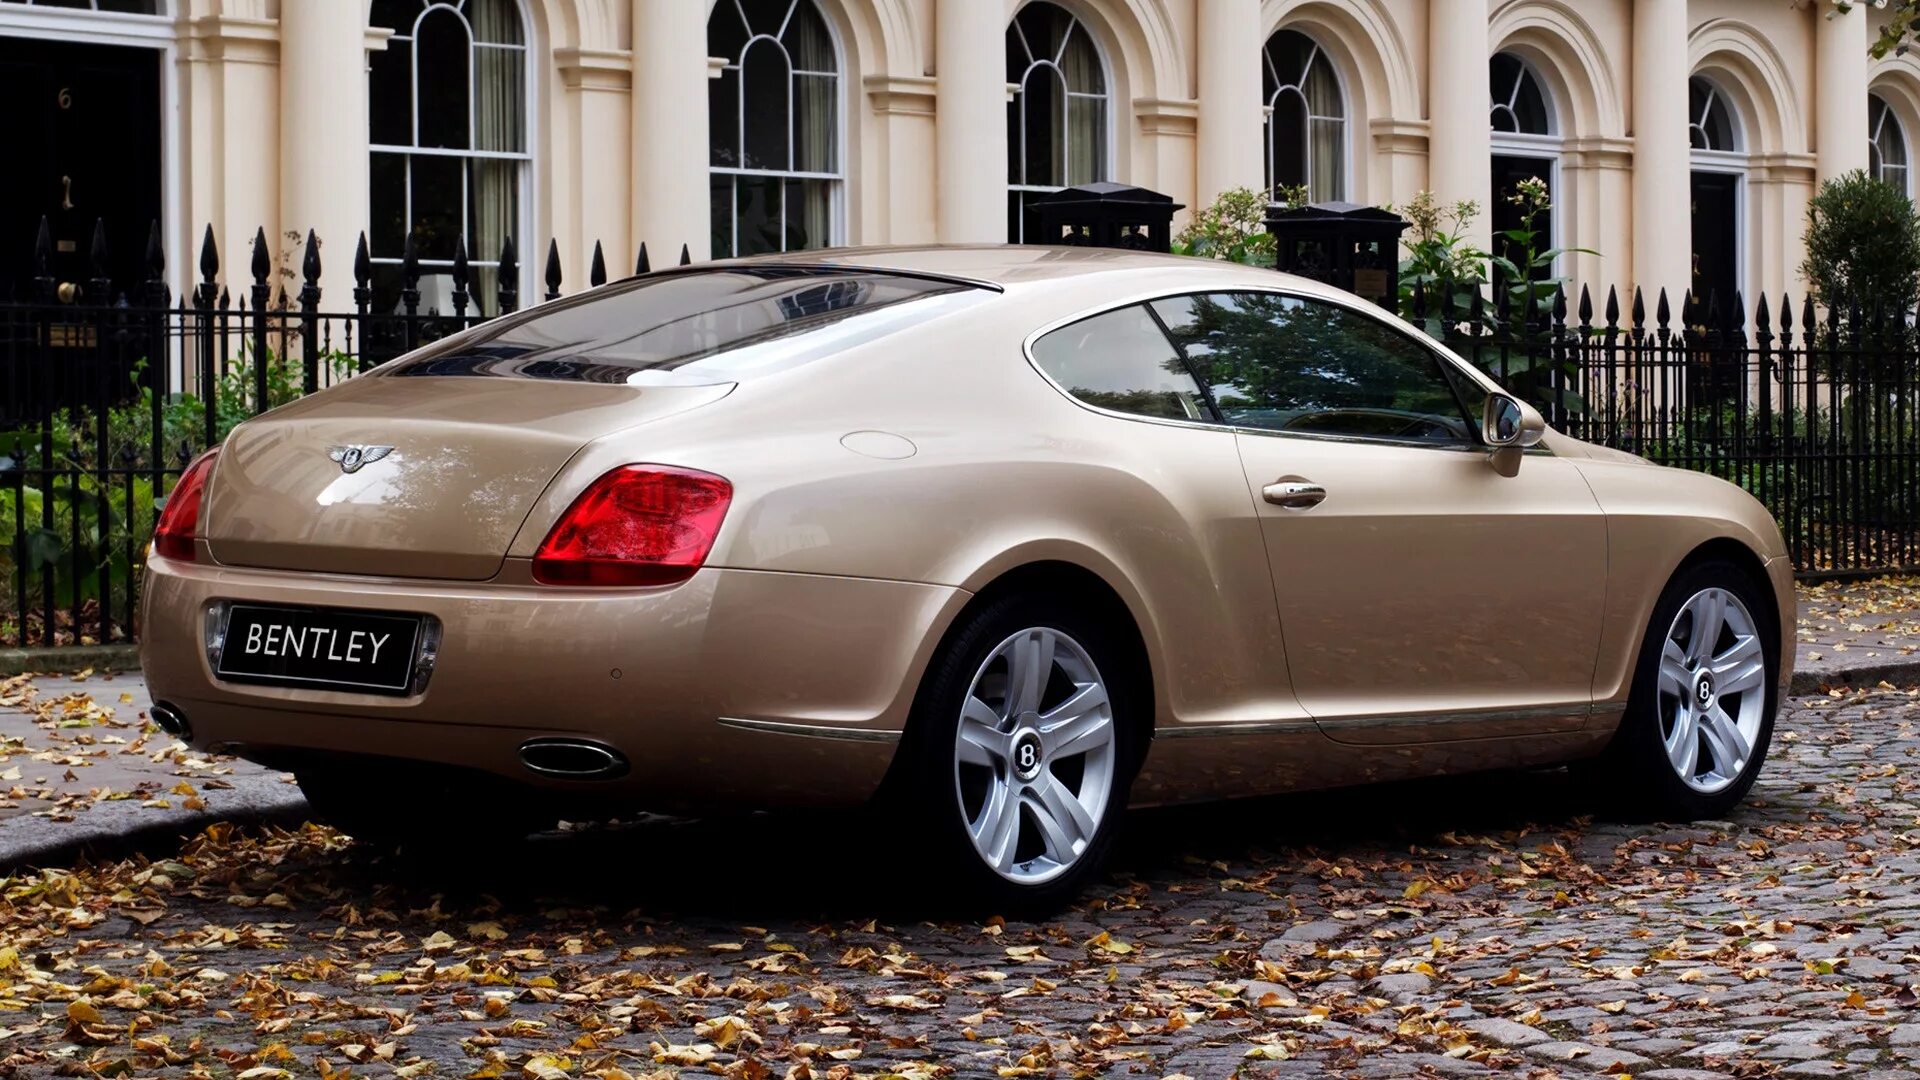 Brown car. Бентли gt Continental 2007. Бентли Континенталь gt 2007. Bentley Continental gt 1. Continental gt 2007.